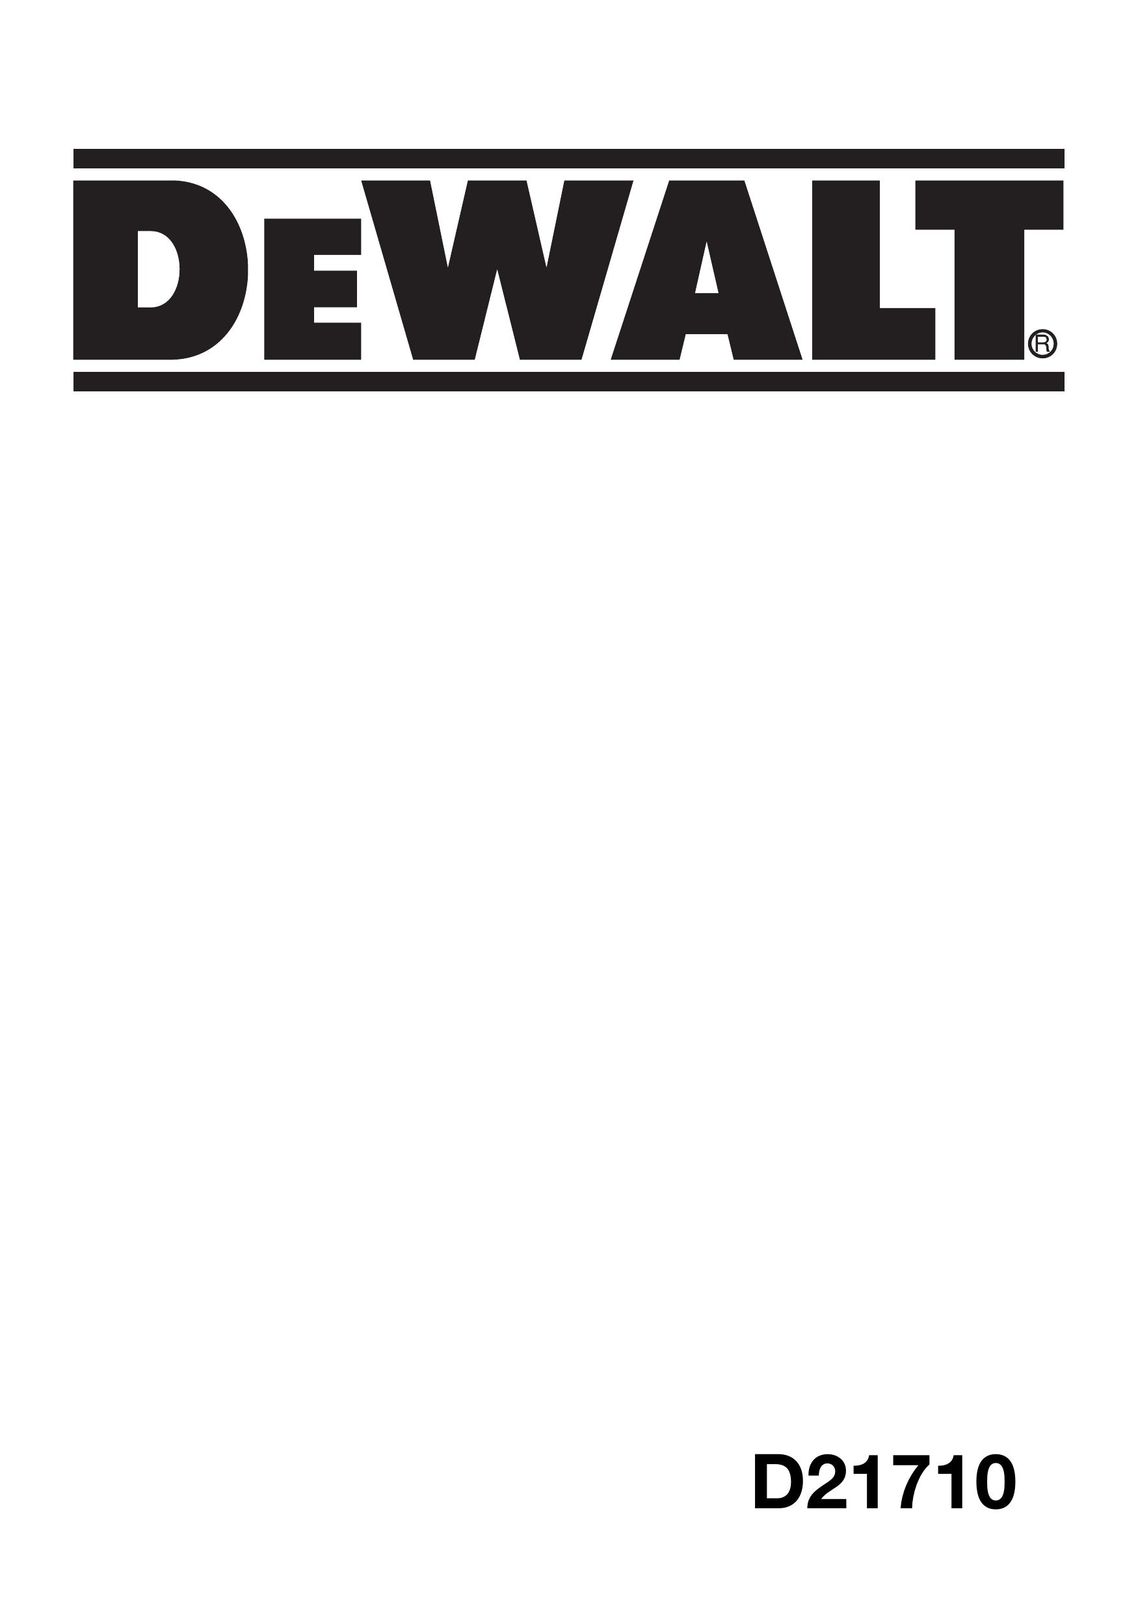 DeWalt D21710 Cordless Drill User Manual